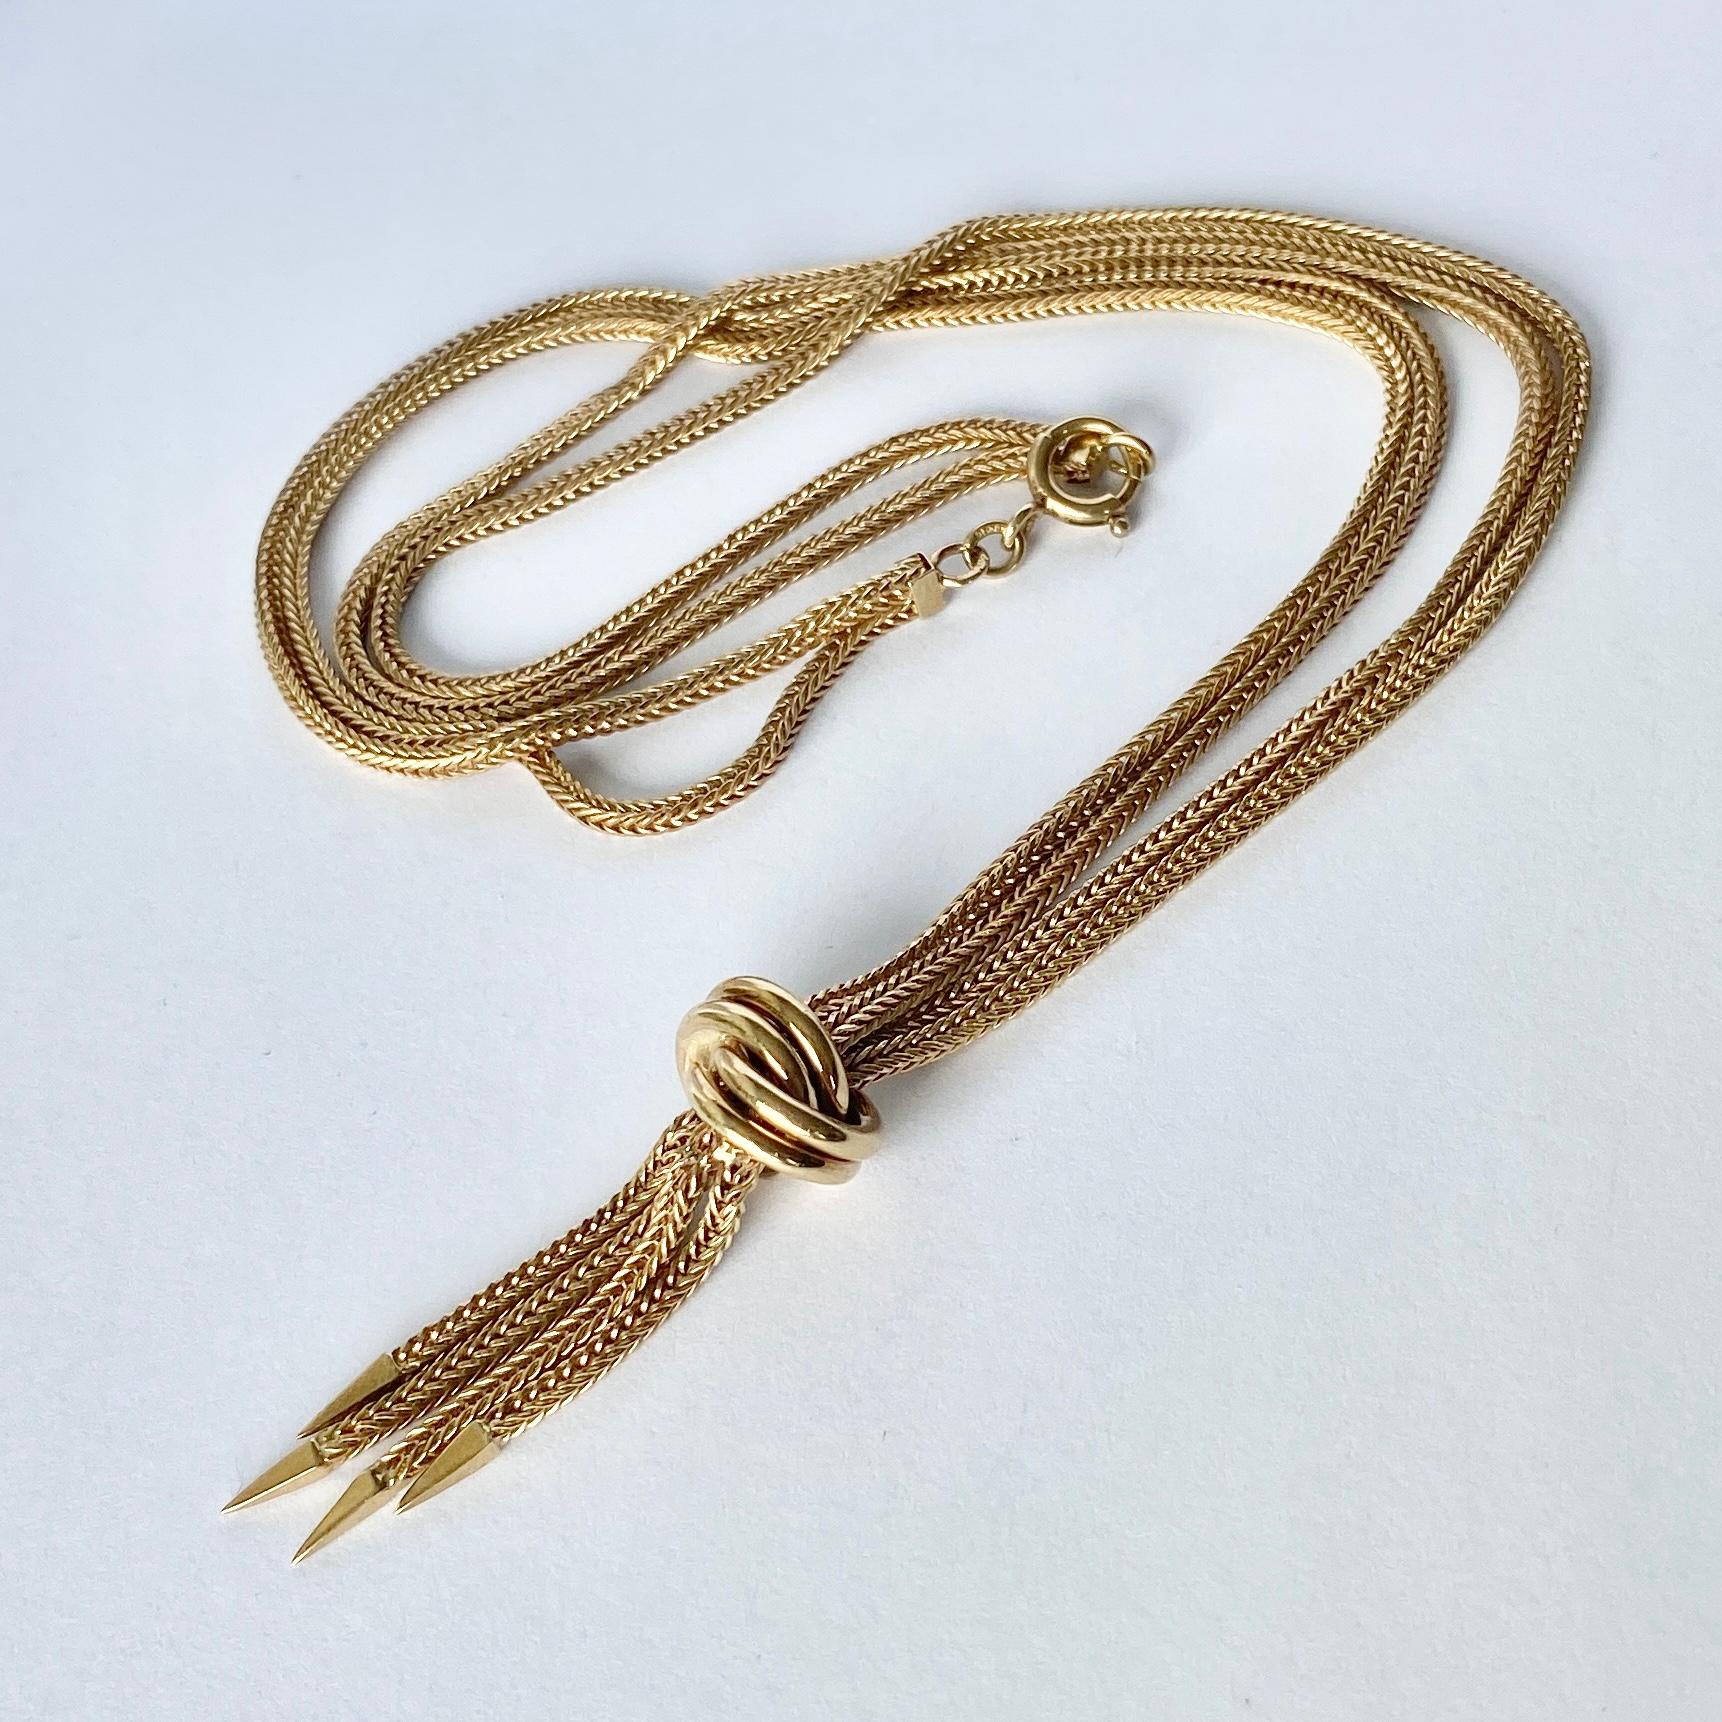 9 carat gold snake chain